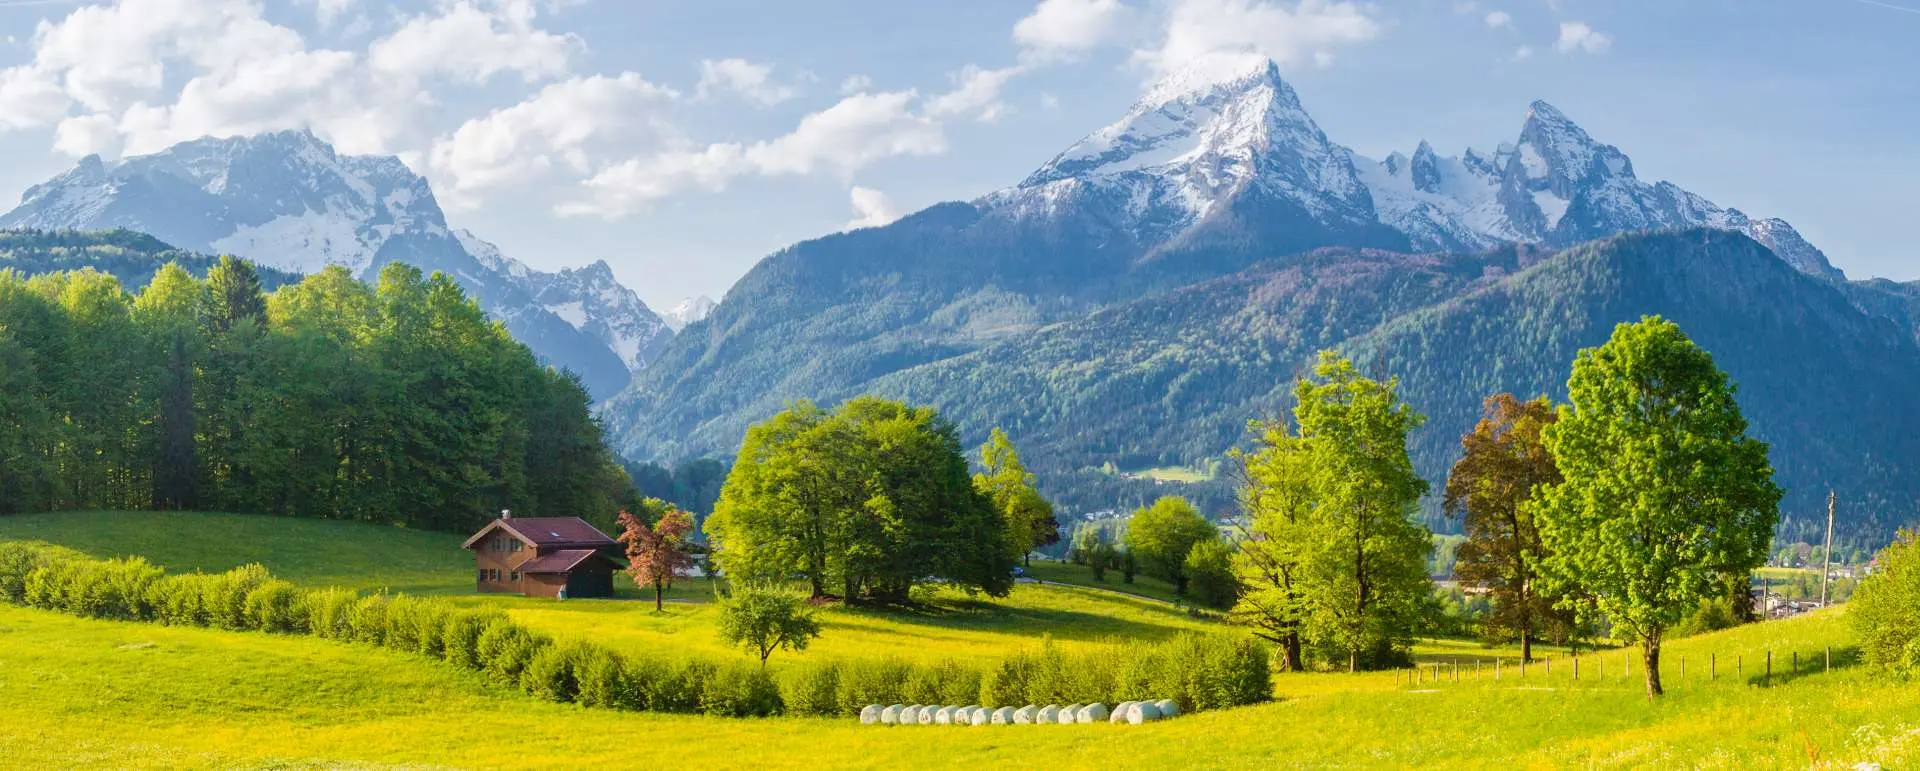 Berchtesgadener Land - the destination for families